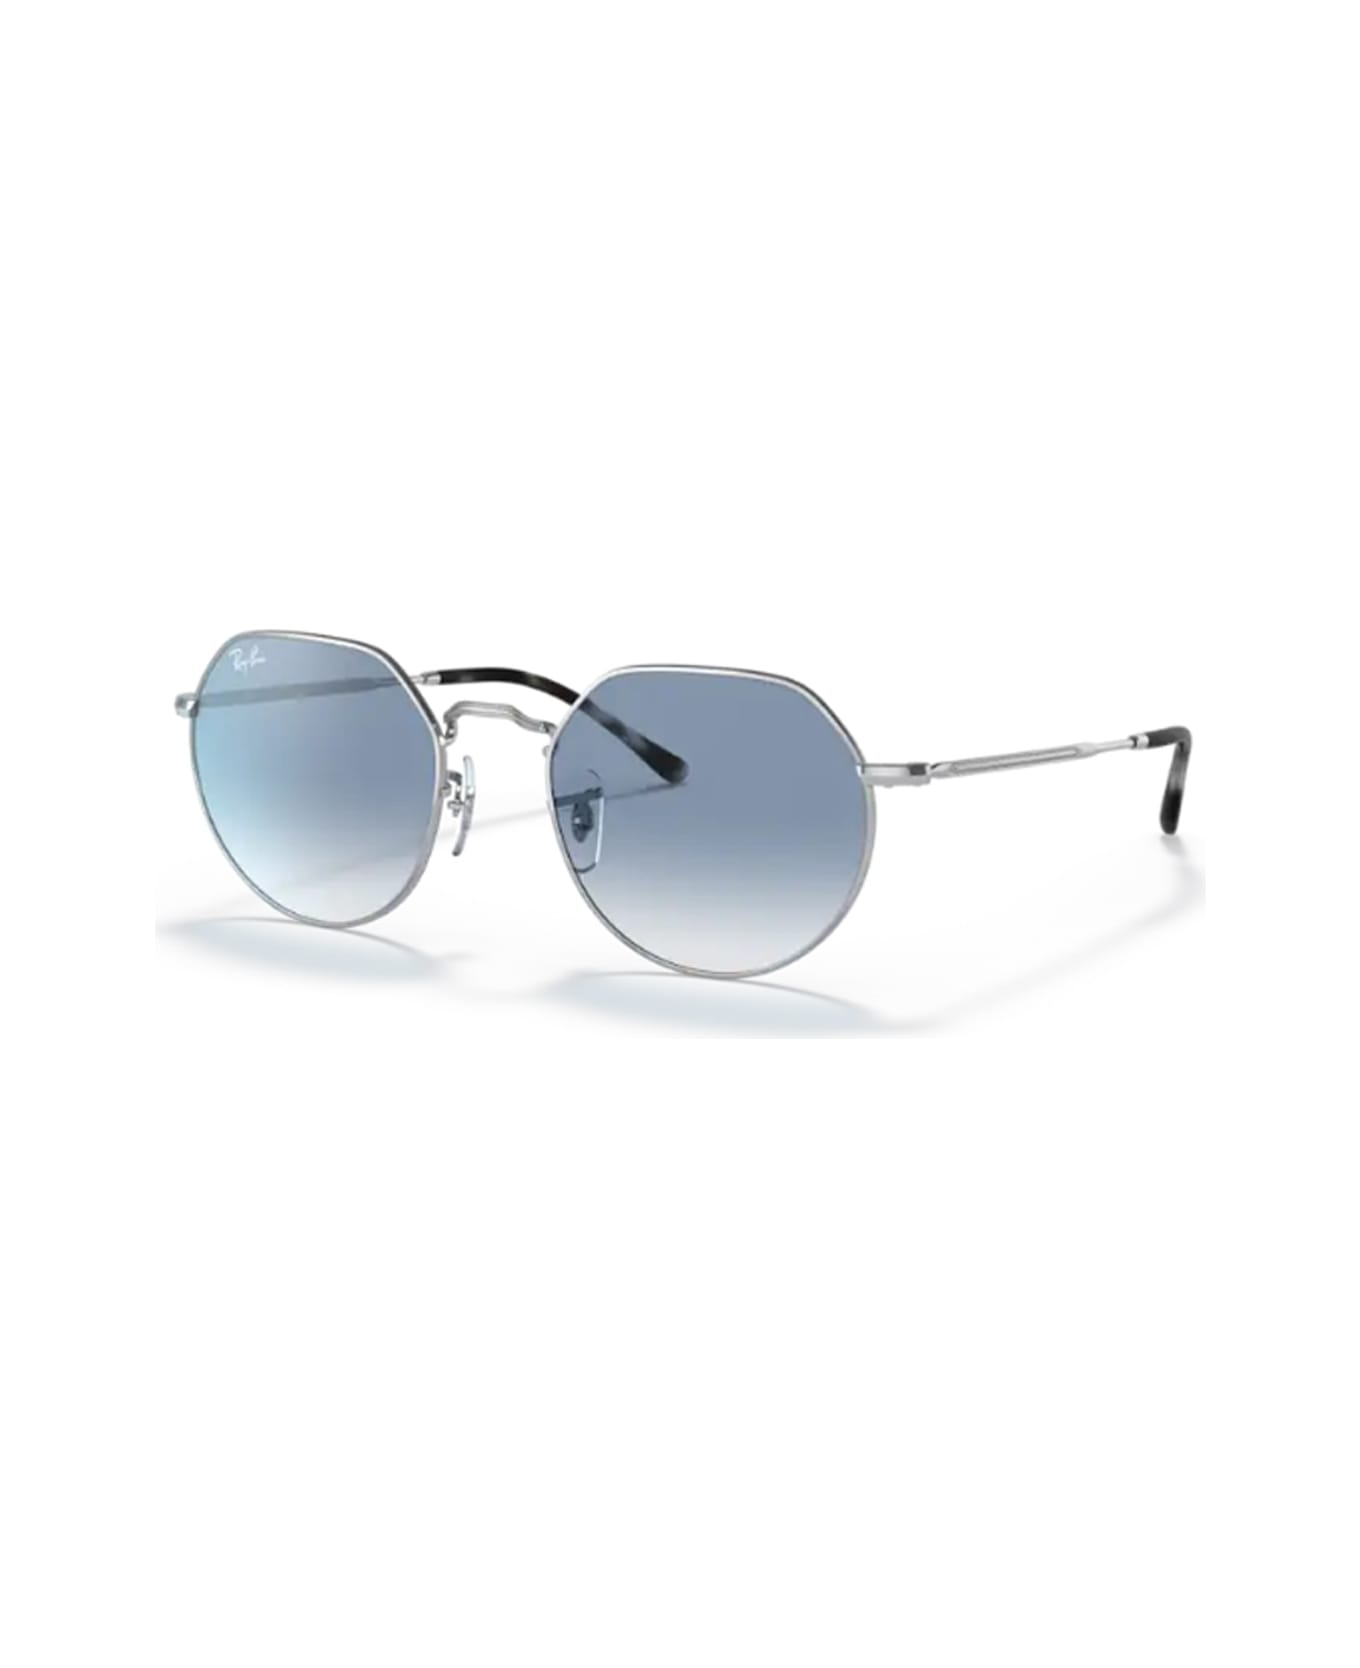 Ray-Ban Rb3565 Sunglasses - Argento サングラス